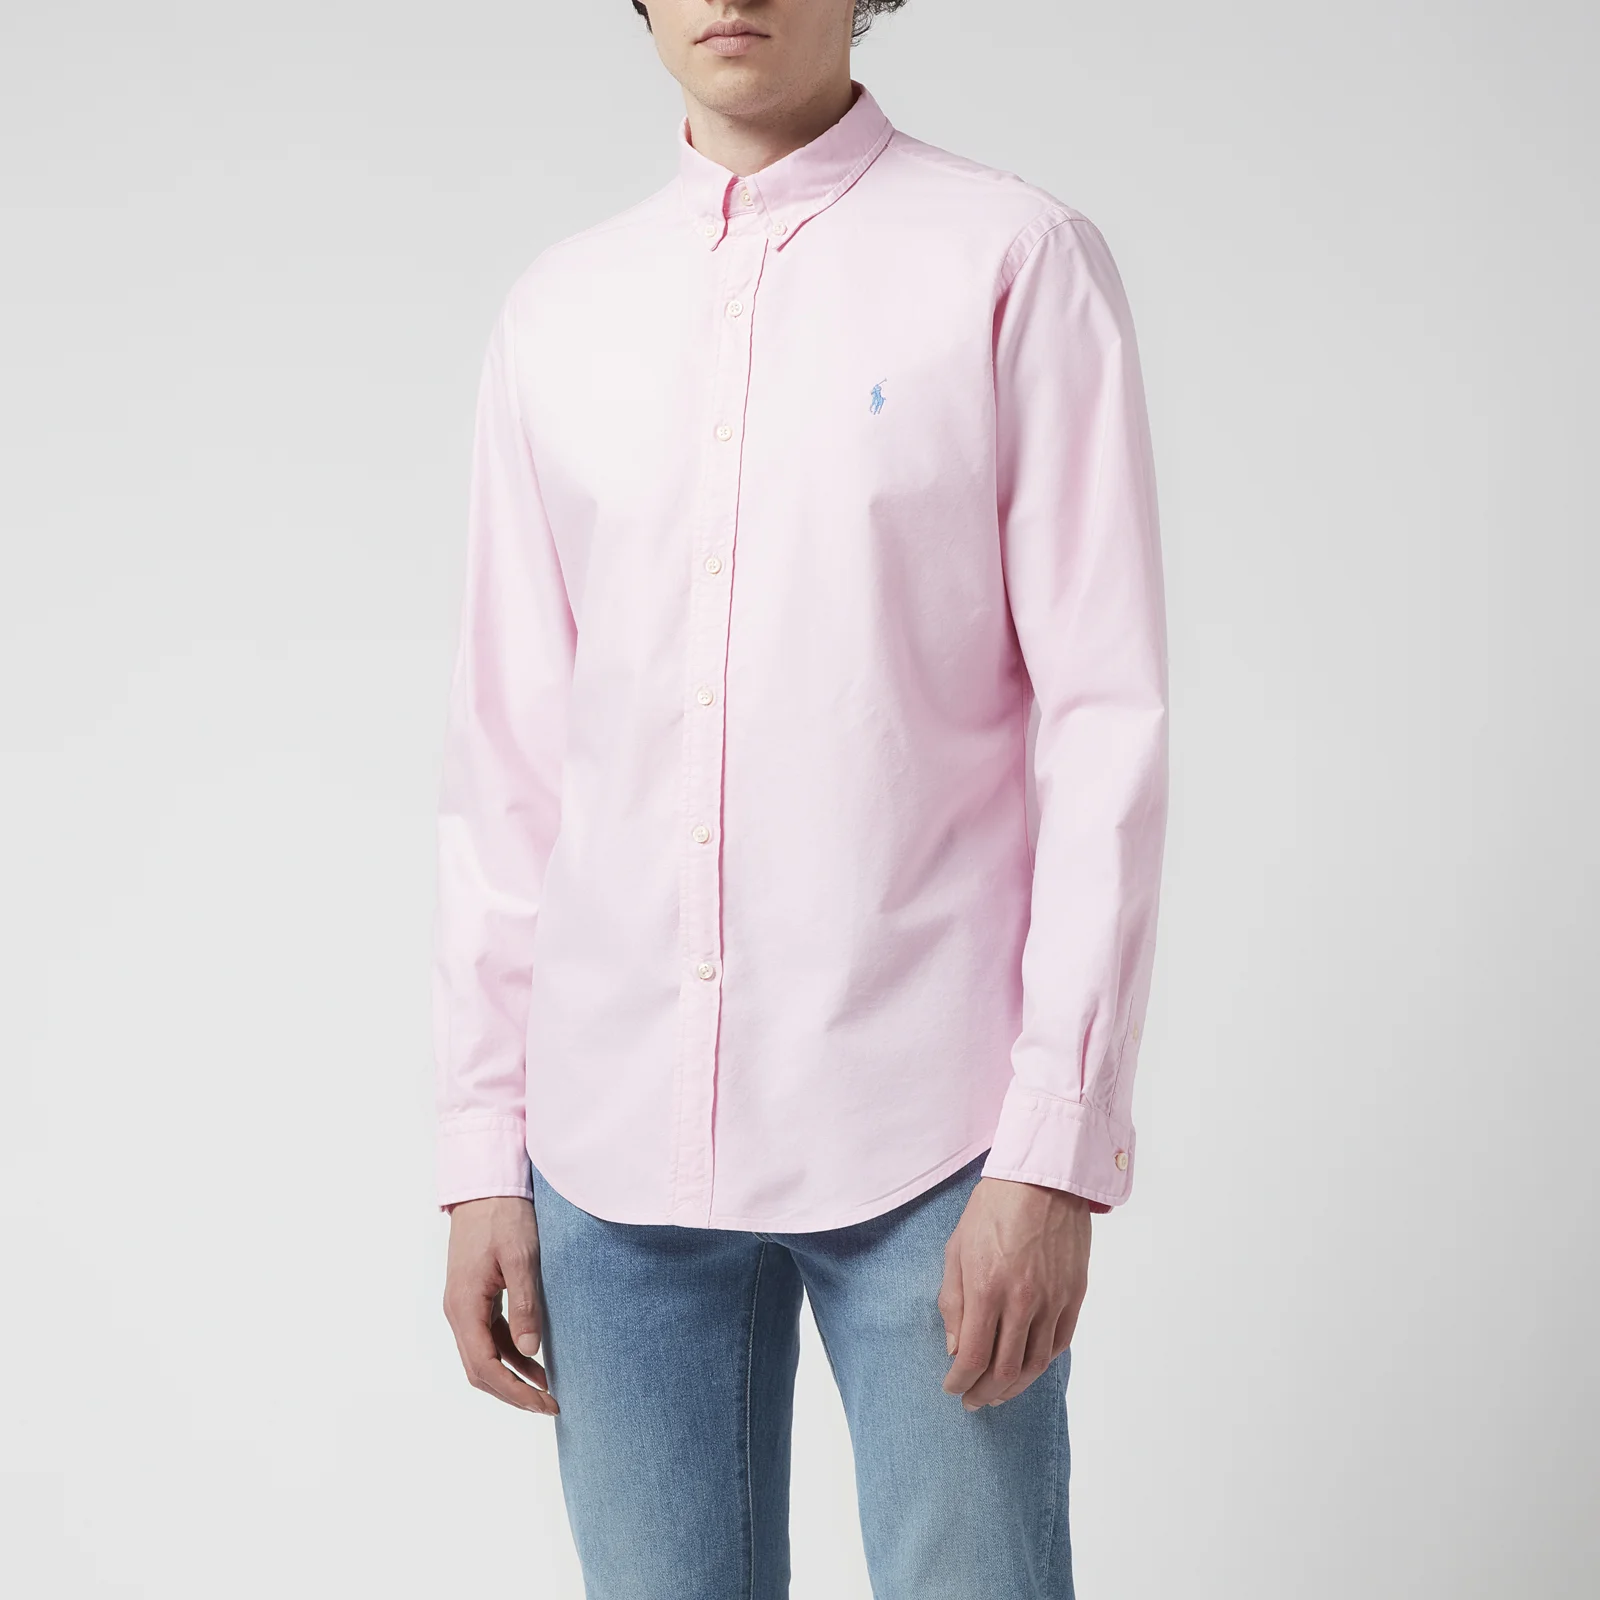 Polo Ralph Lauren Men's Garment Dyed Oxford Shirt - Carmel Pink Image 1